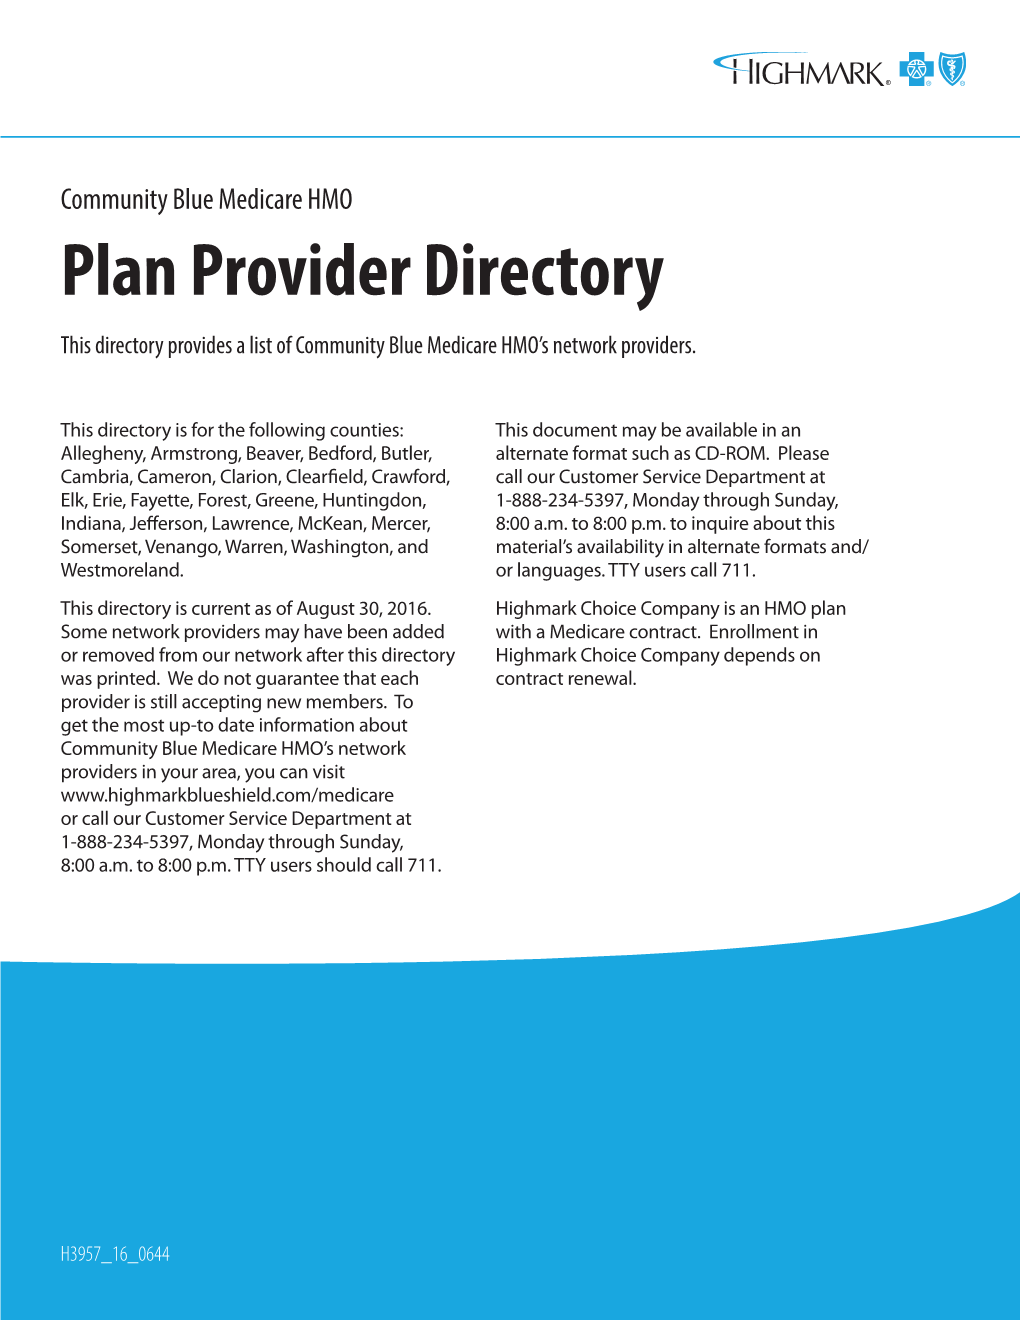 Community Blue Medicare Hmoplan Provider Directory